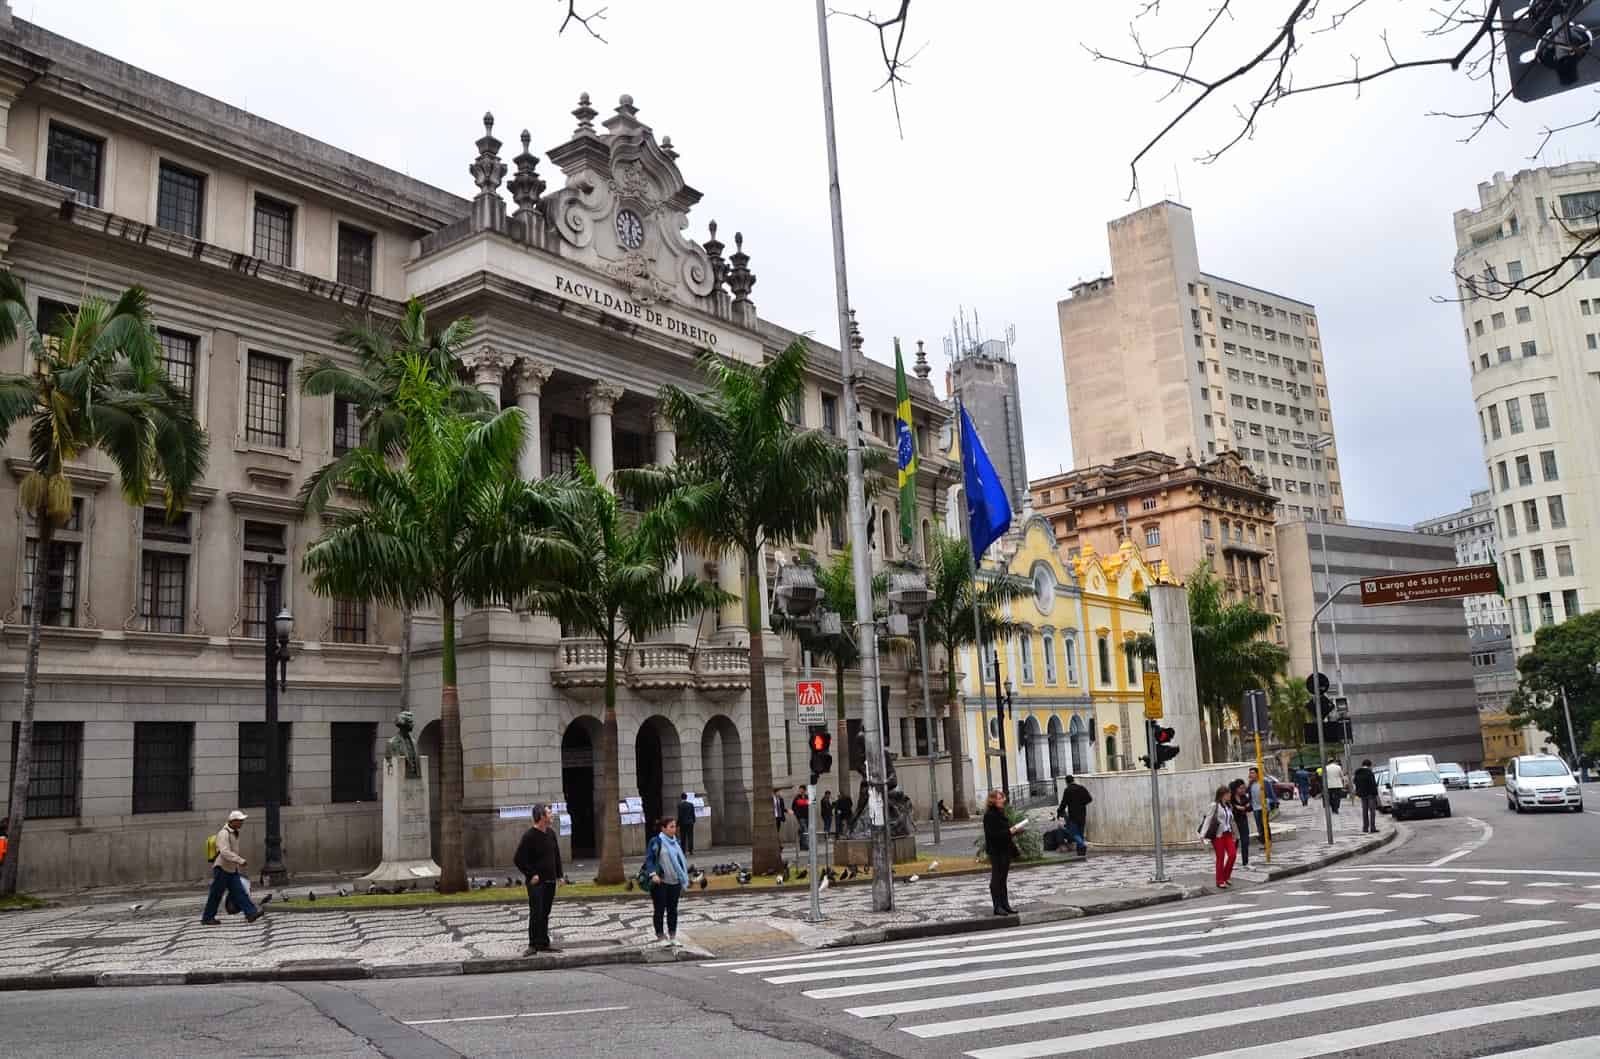 Universidade de São Paulo in São Paulo, Brazil